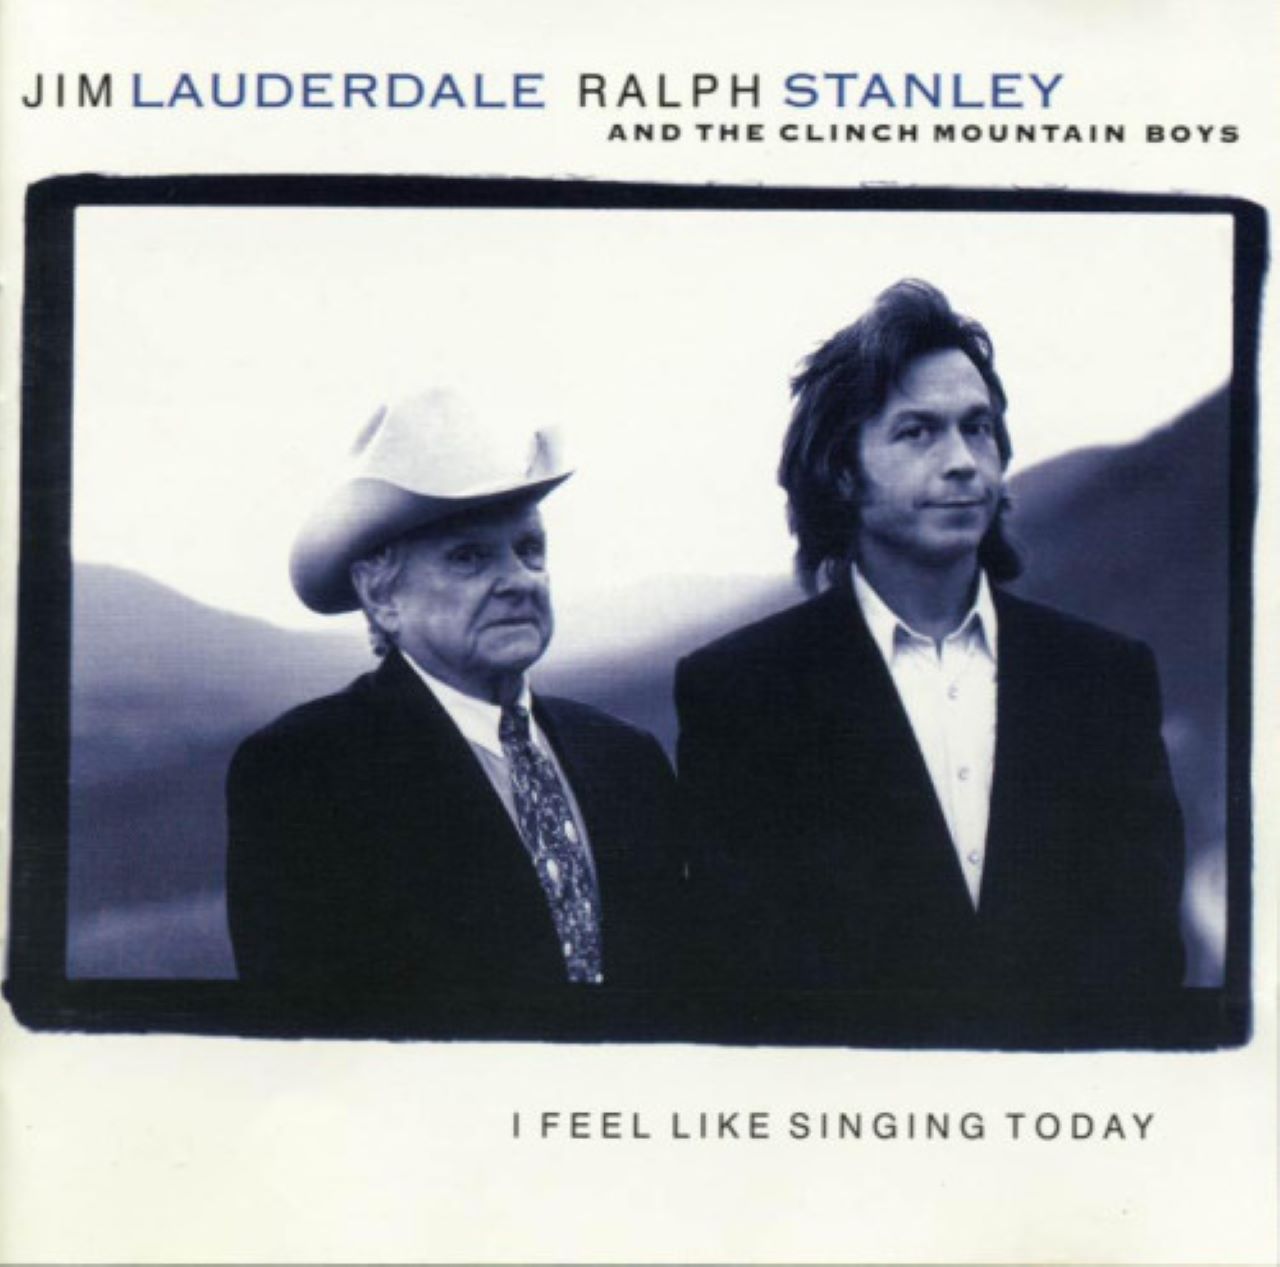 Jim Lauderdale & Ralph Stanley - I Feel Like Singing Today cover album